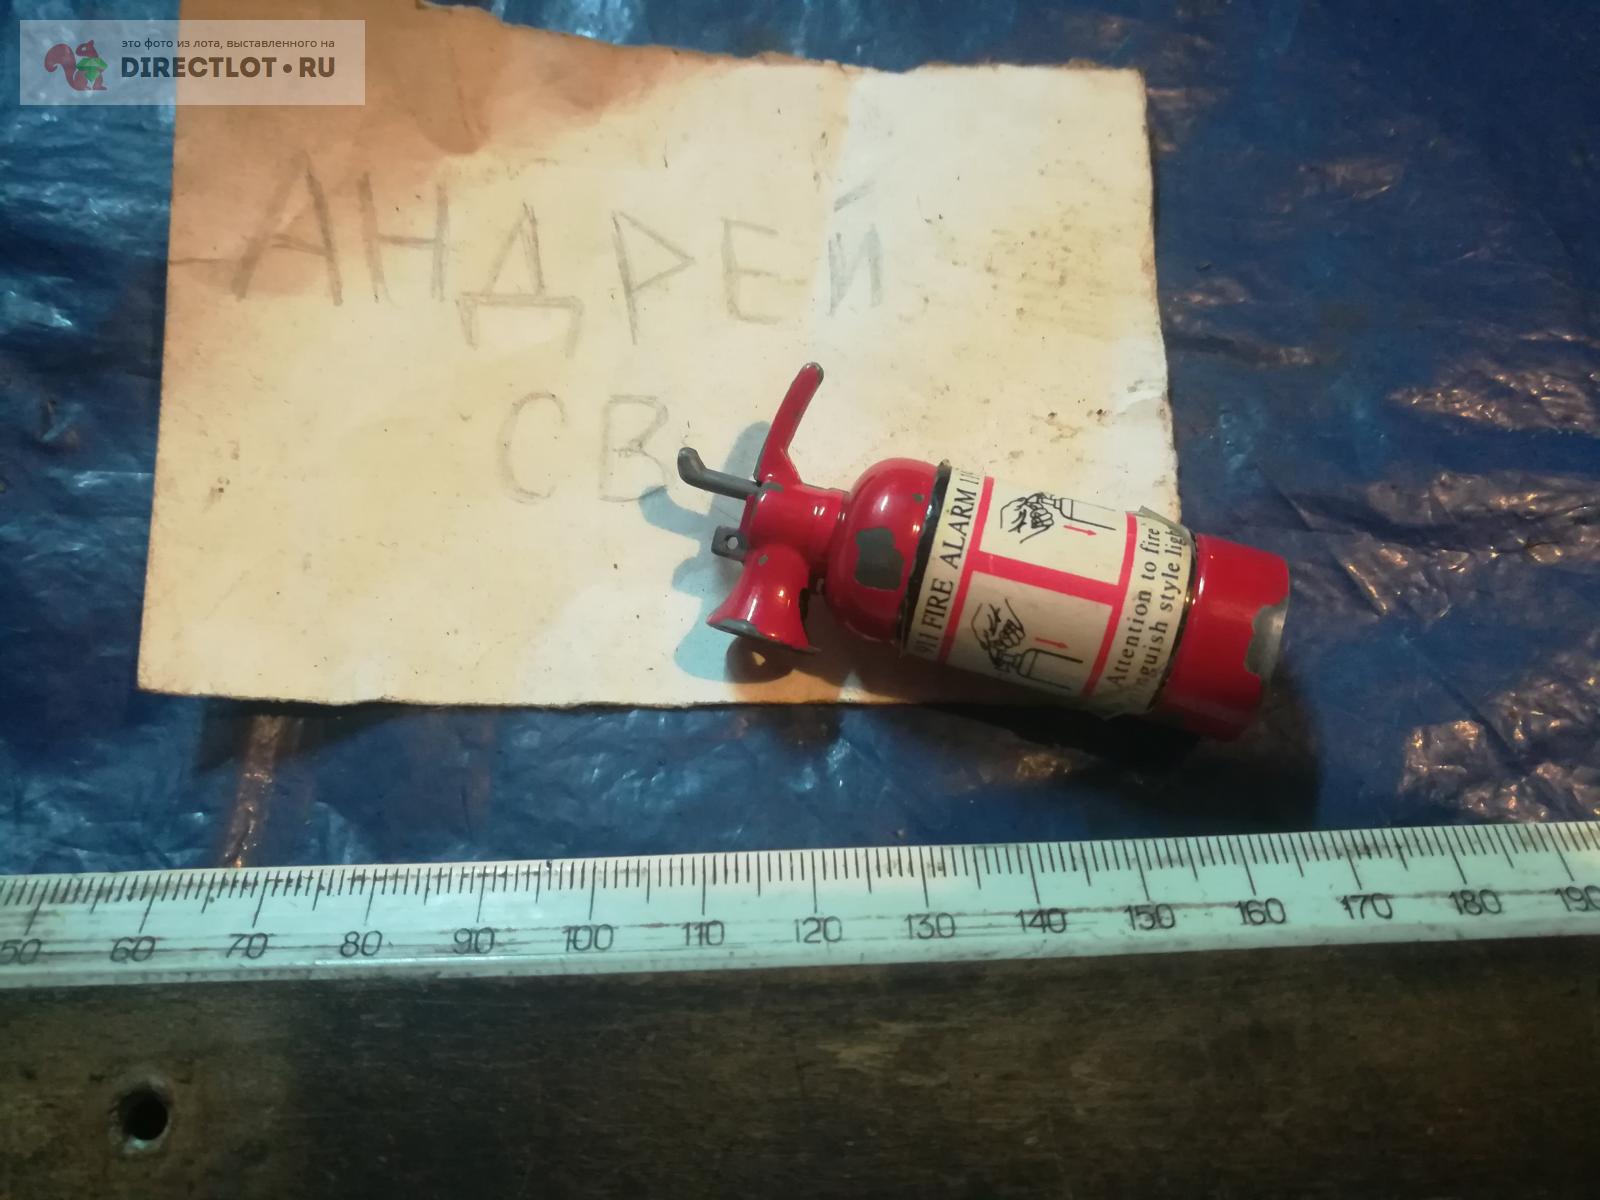 зажигалка в виде огнетушителя  в Омске цена 50,00 Р на DIRECTLOT .